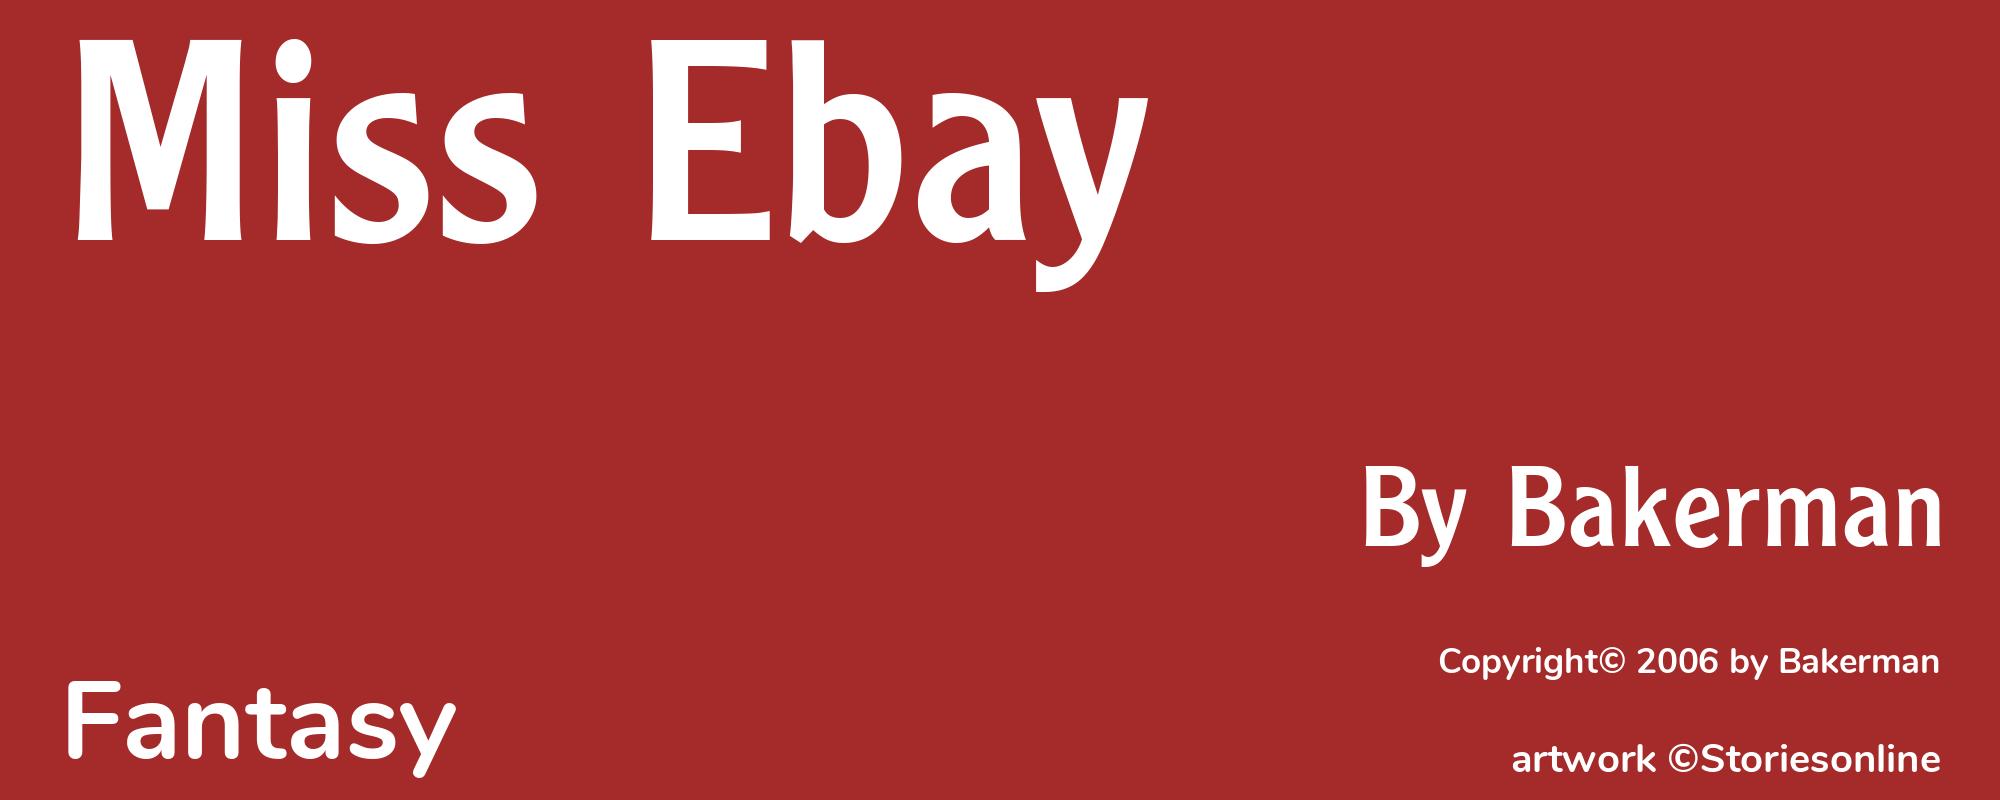 Miss Ebay - Cover